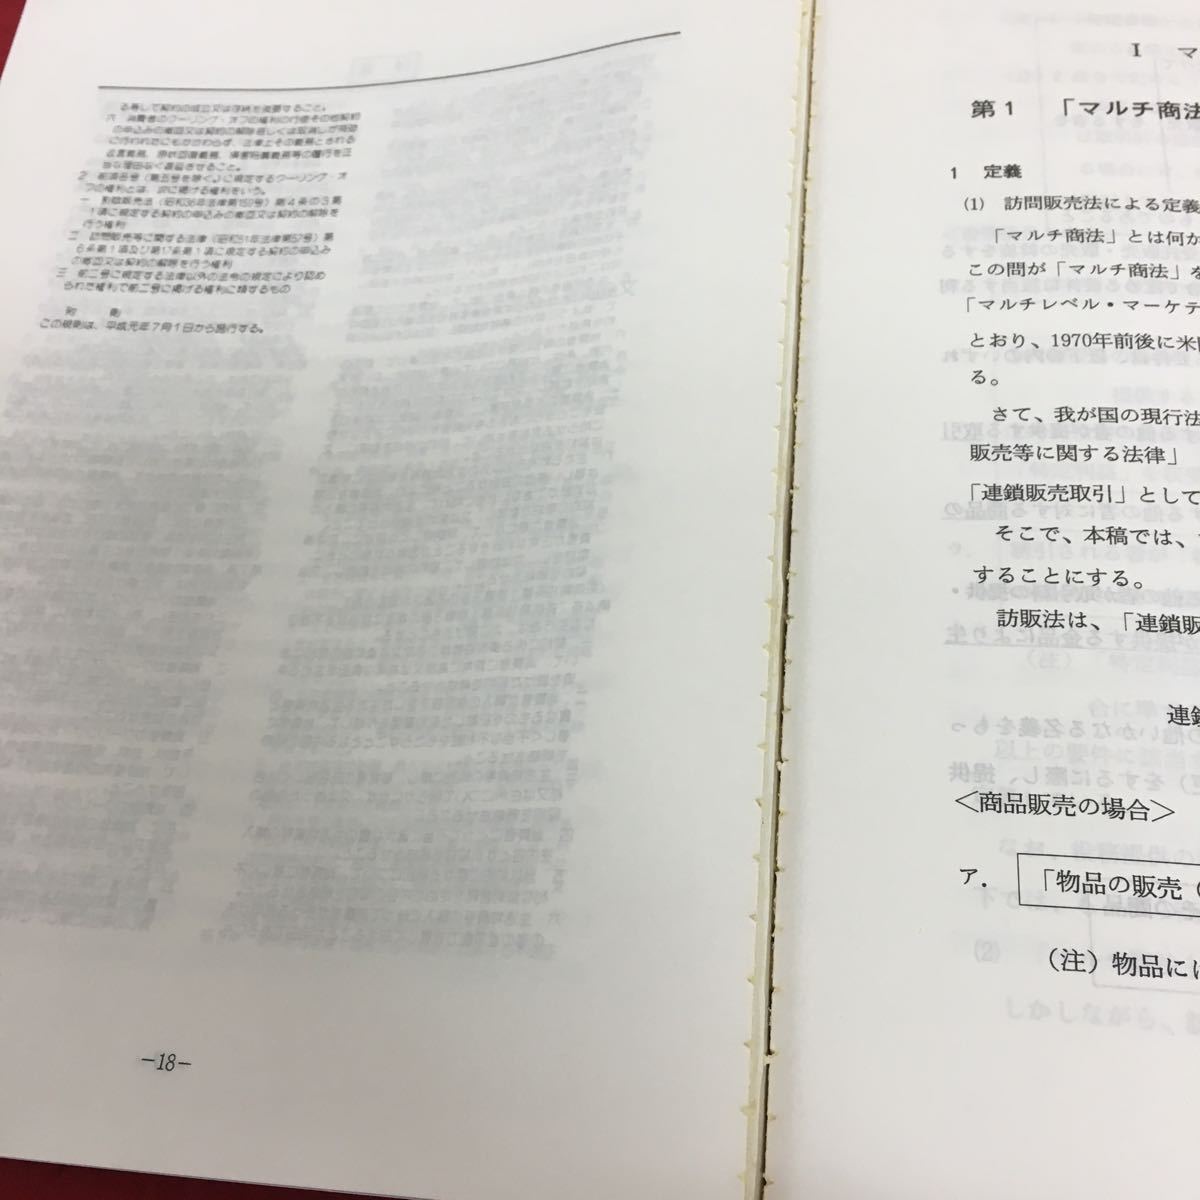 b-403 消費者被害法律相談ガイドブック 平成2年 第二東京弁護士会 法律相談センター 消費者問題対策委員会※4_ページ離れあり